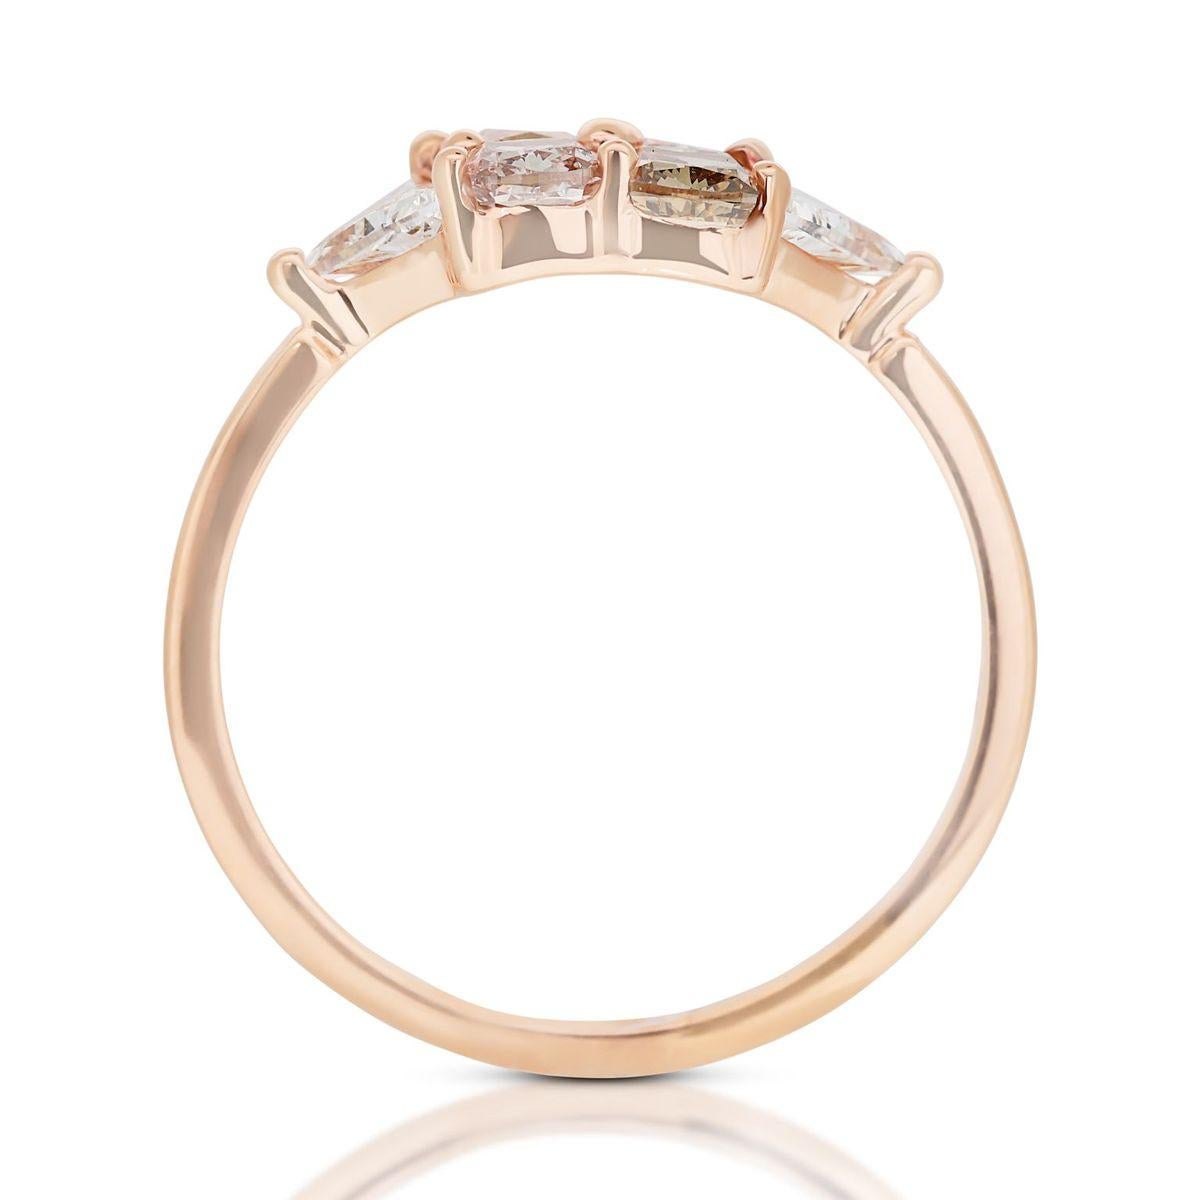 Elegant 14k Rose Gold Multi-Color Ring with 1.16 Ct Natural Diamonds, NGI Cert For Sale 1